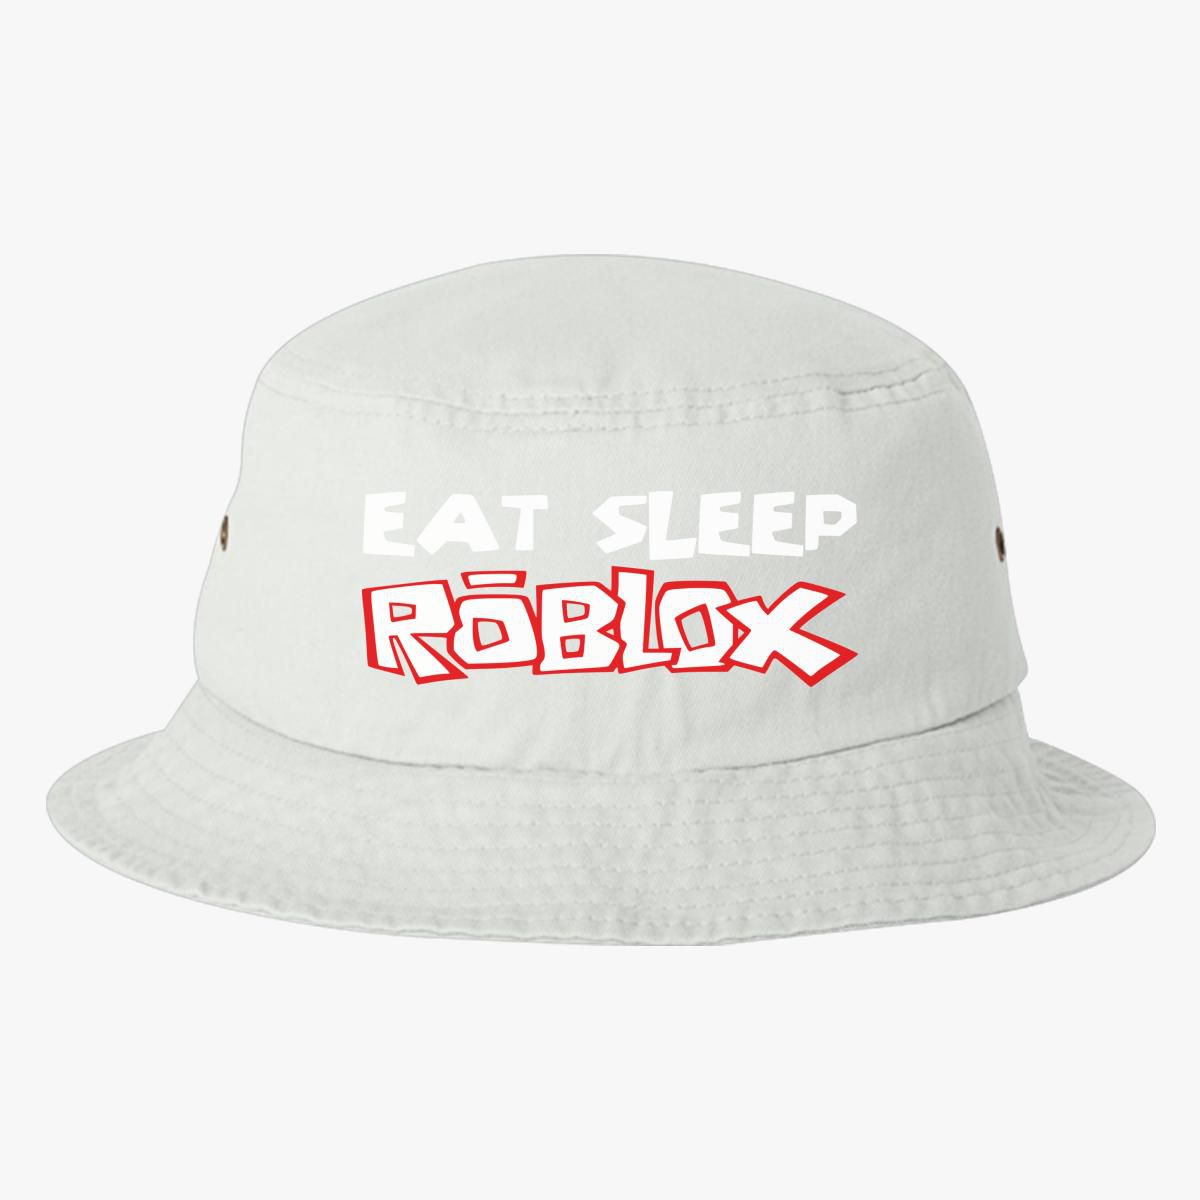 D3ez0ewxb2u9wm - roblox bucket hat